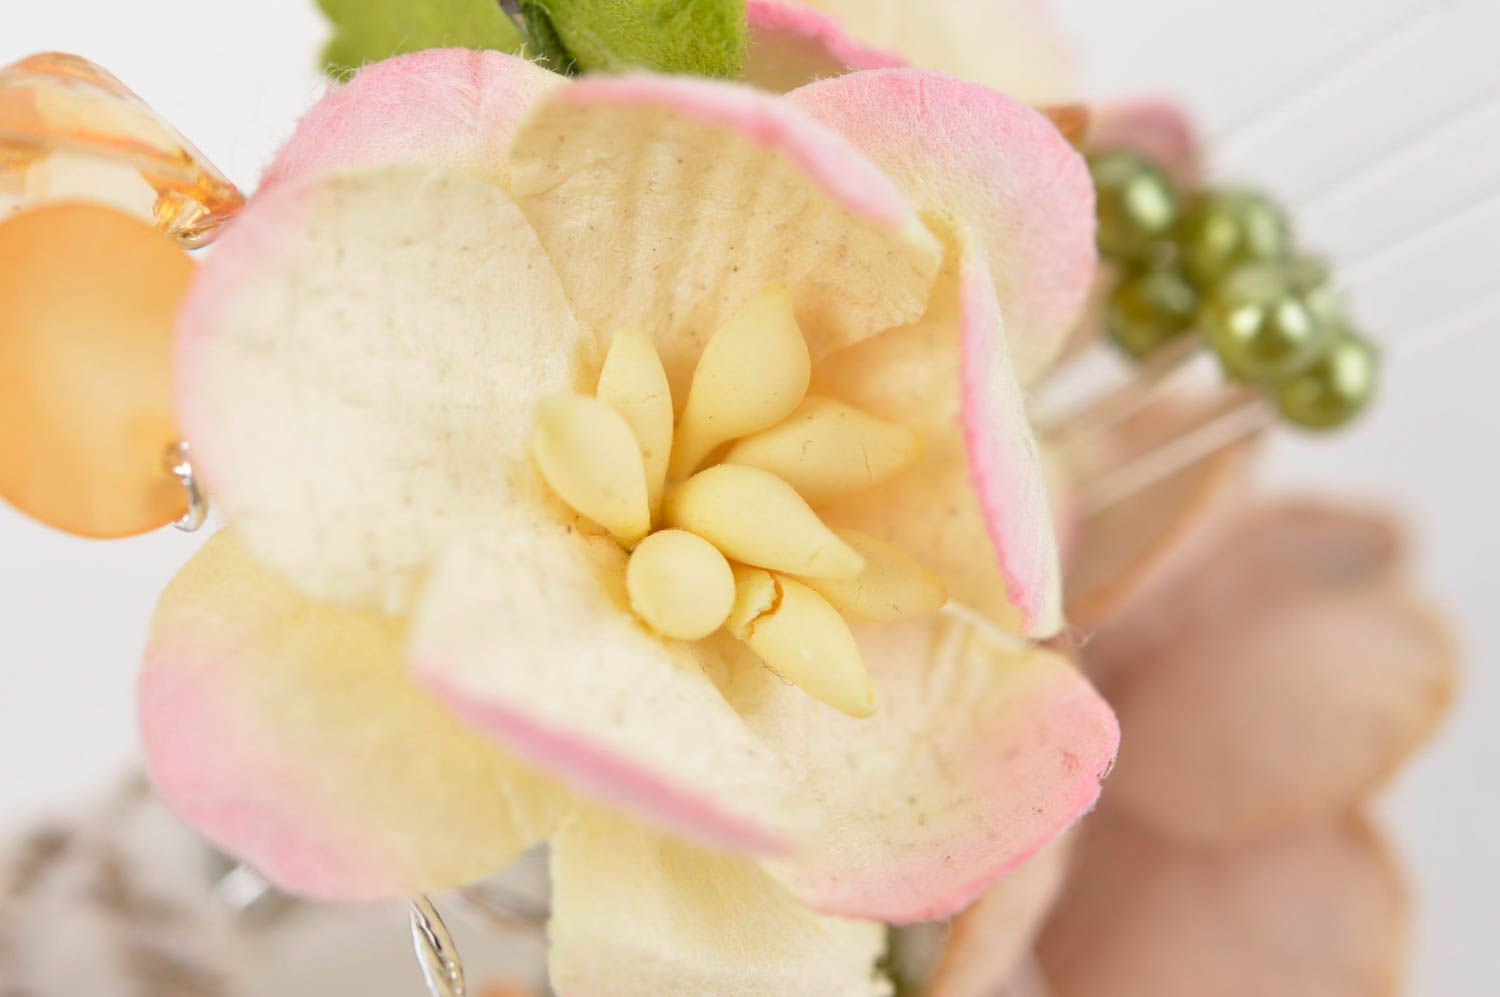 Handmade bouquet designer bouquet interior decor gift ideas artificial flowers photo 5